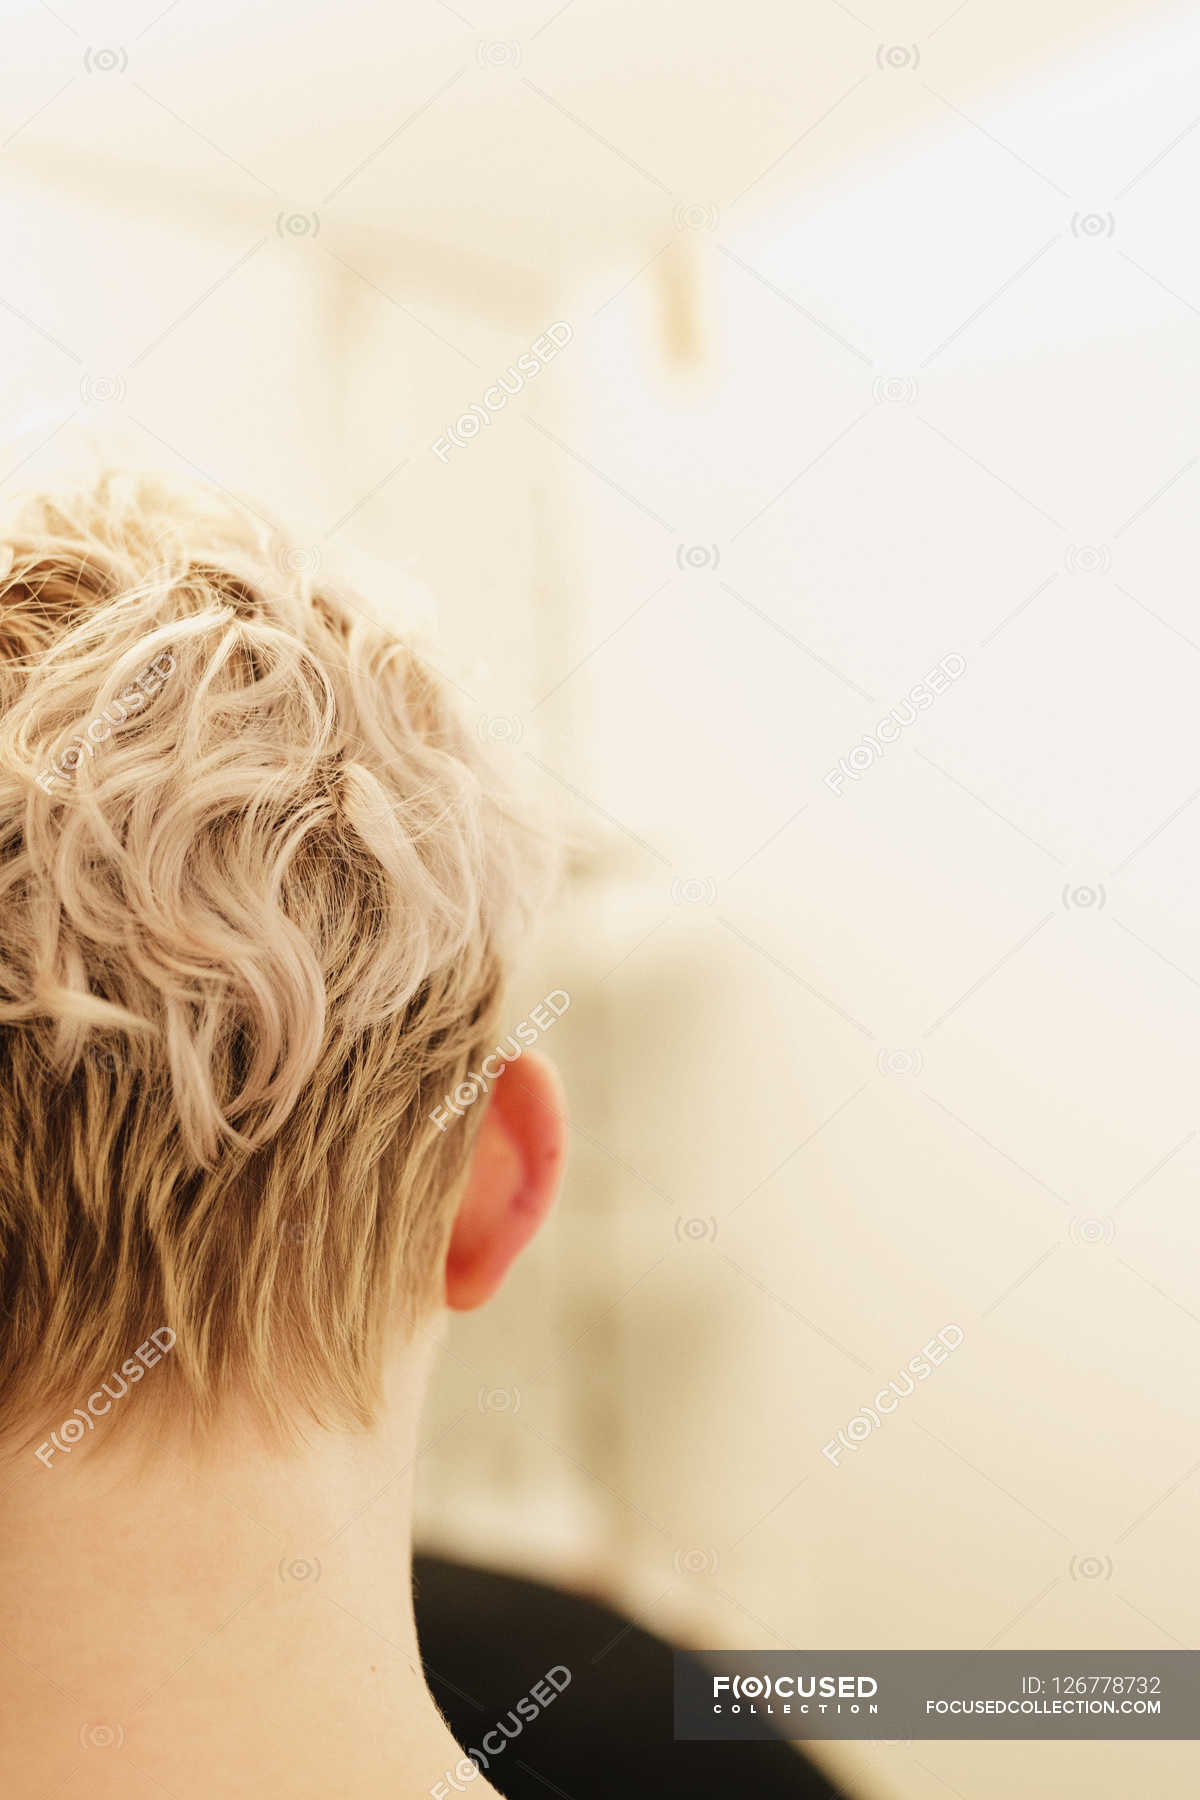 Woman With Short Wavy Blonde Hair Unrecognizable Person Copy